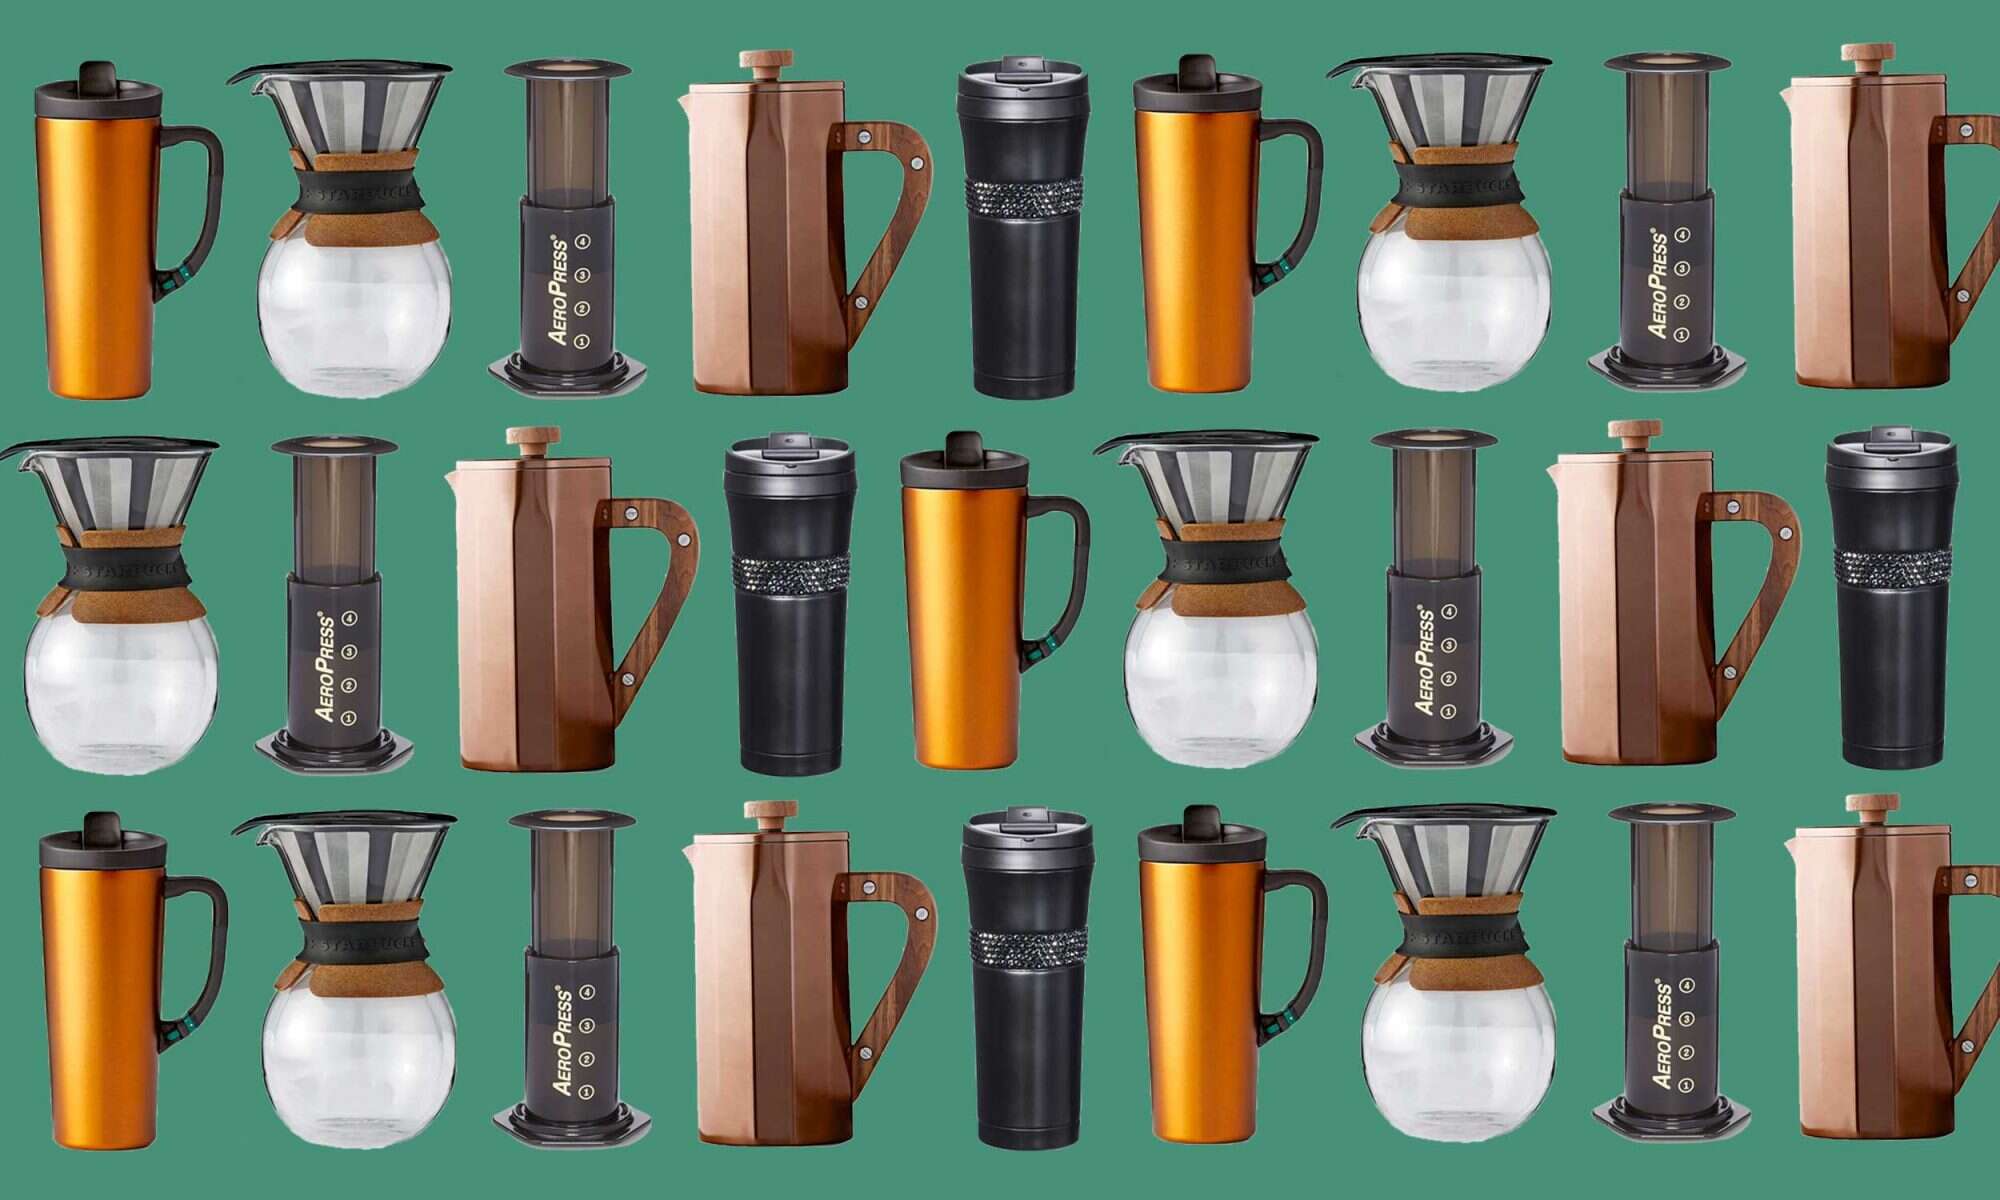 Shop Starbucks Coffee Gift Set online